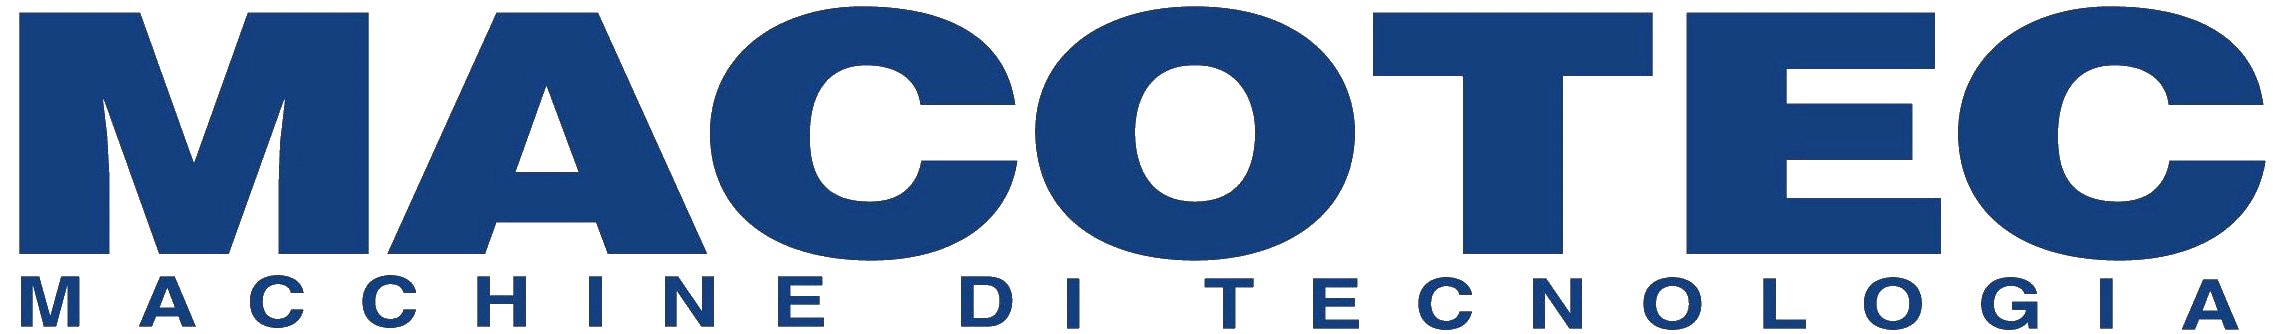 macotec logo transp